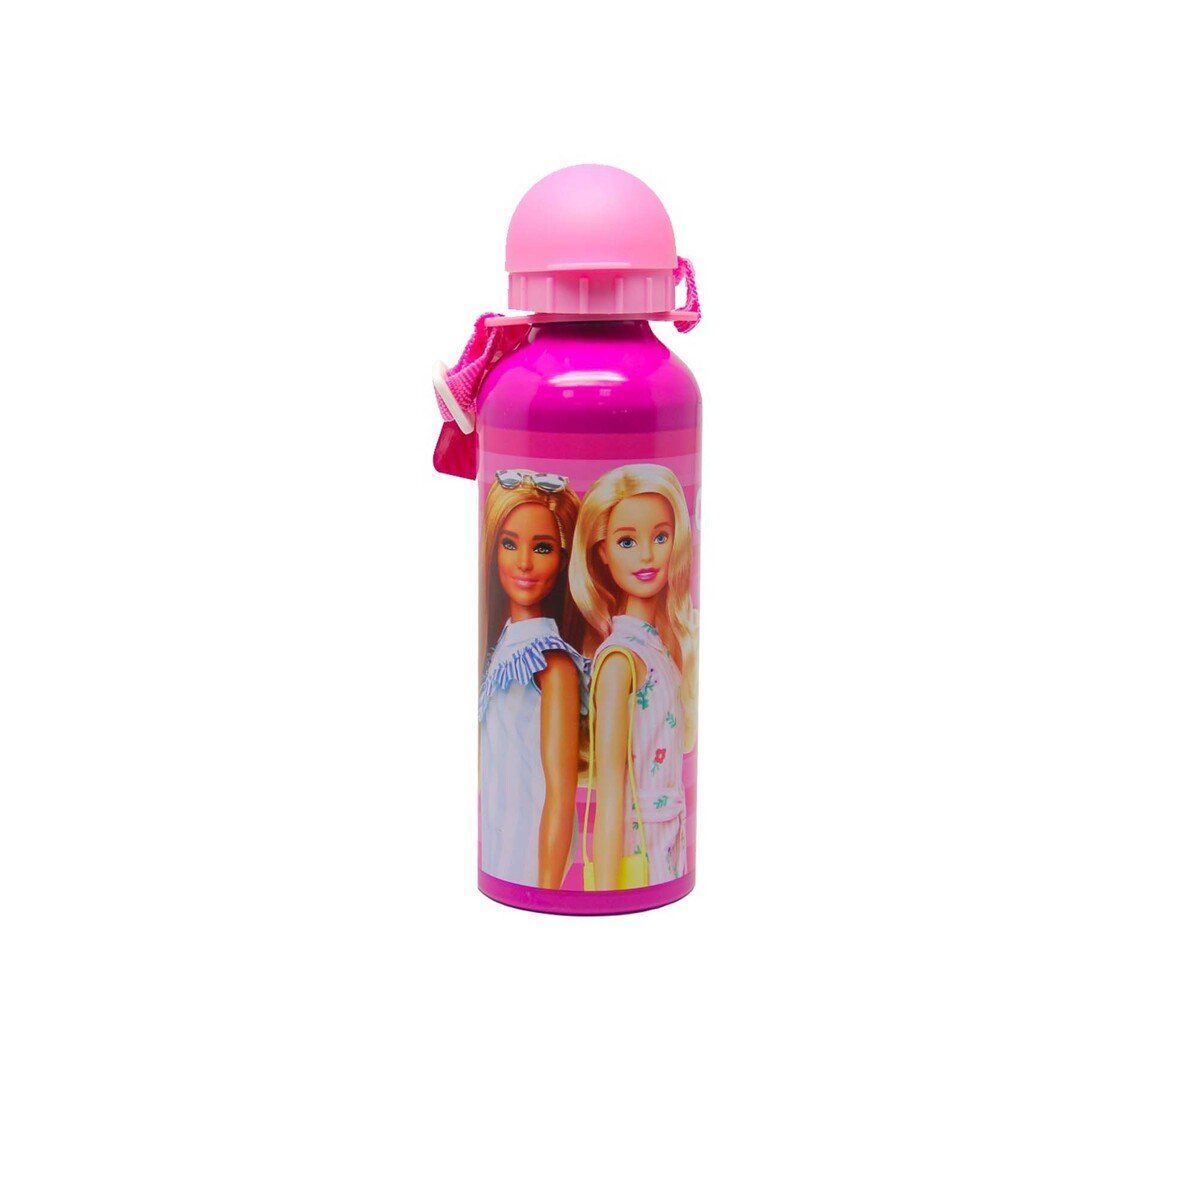 Barbie School Metal Water Bottle 15-0801